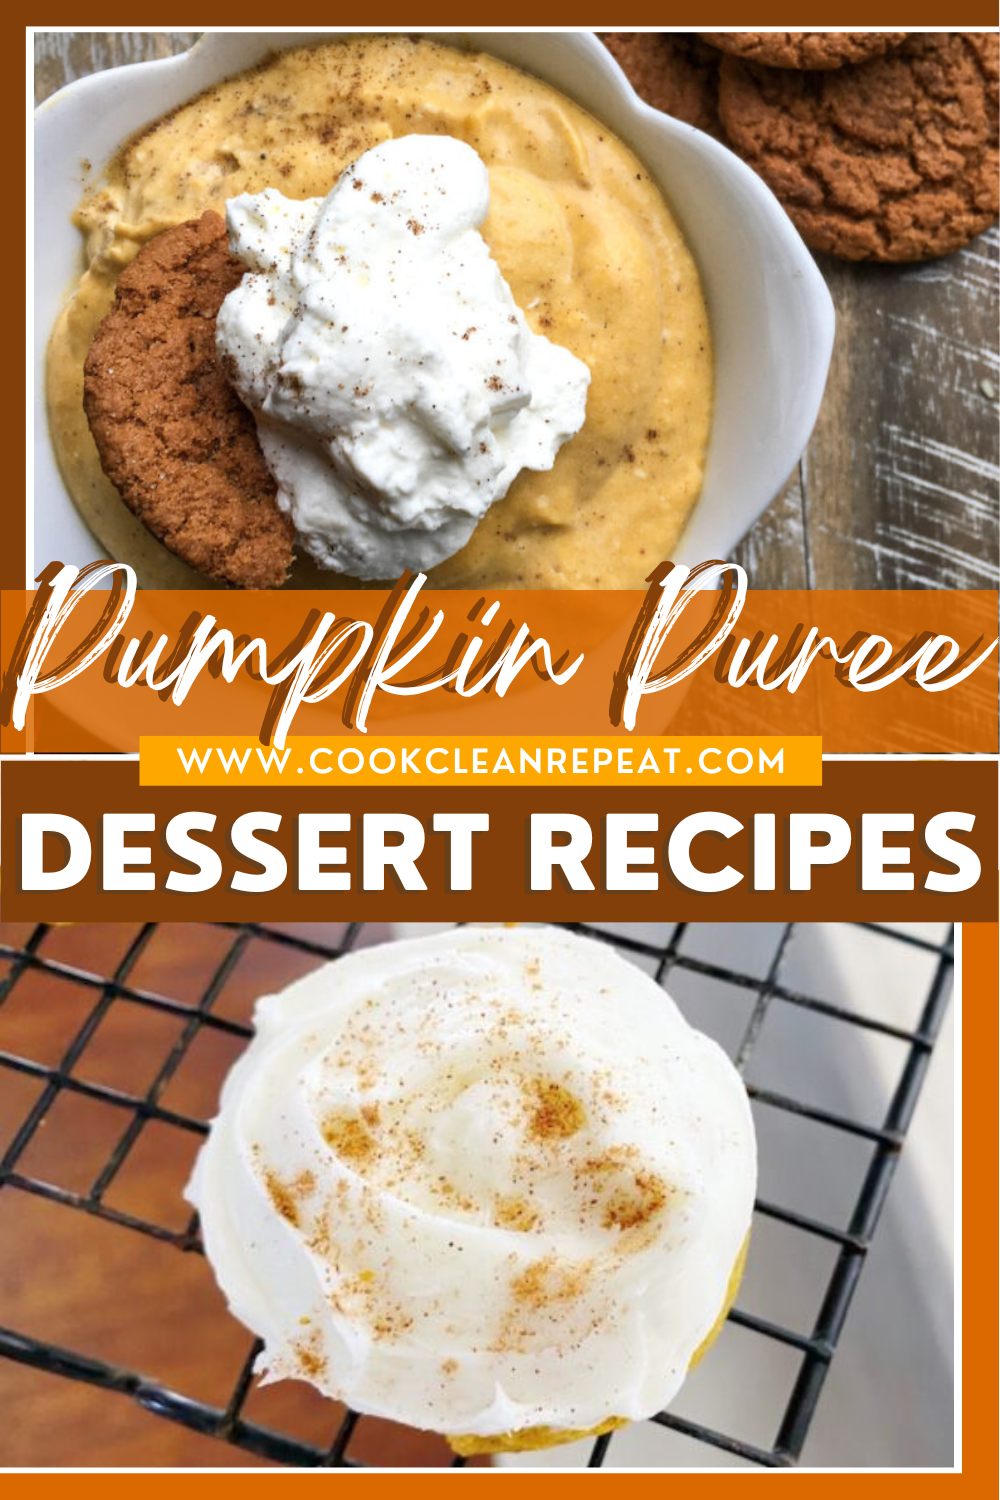 Pin showing the title Pumpkin Puree Dessert Recipes